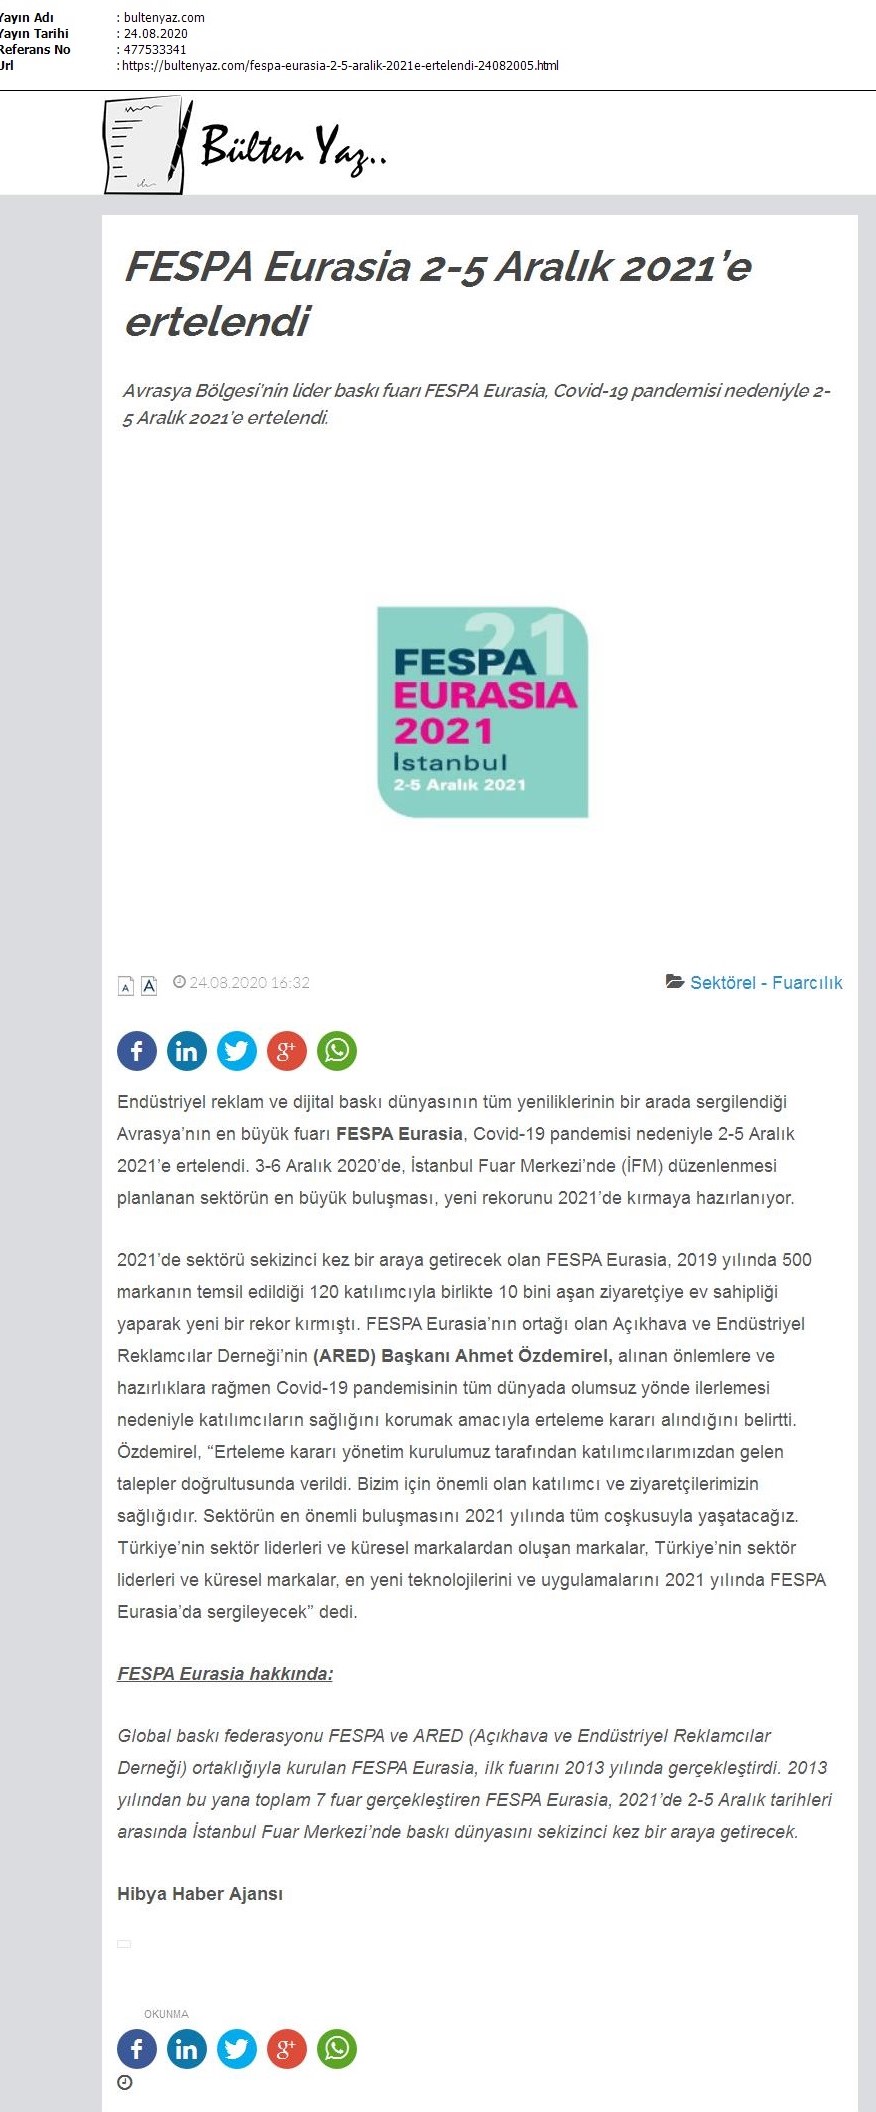 FESPA Eurasia 2-5 Aralık 2021’e ertelendi